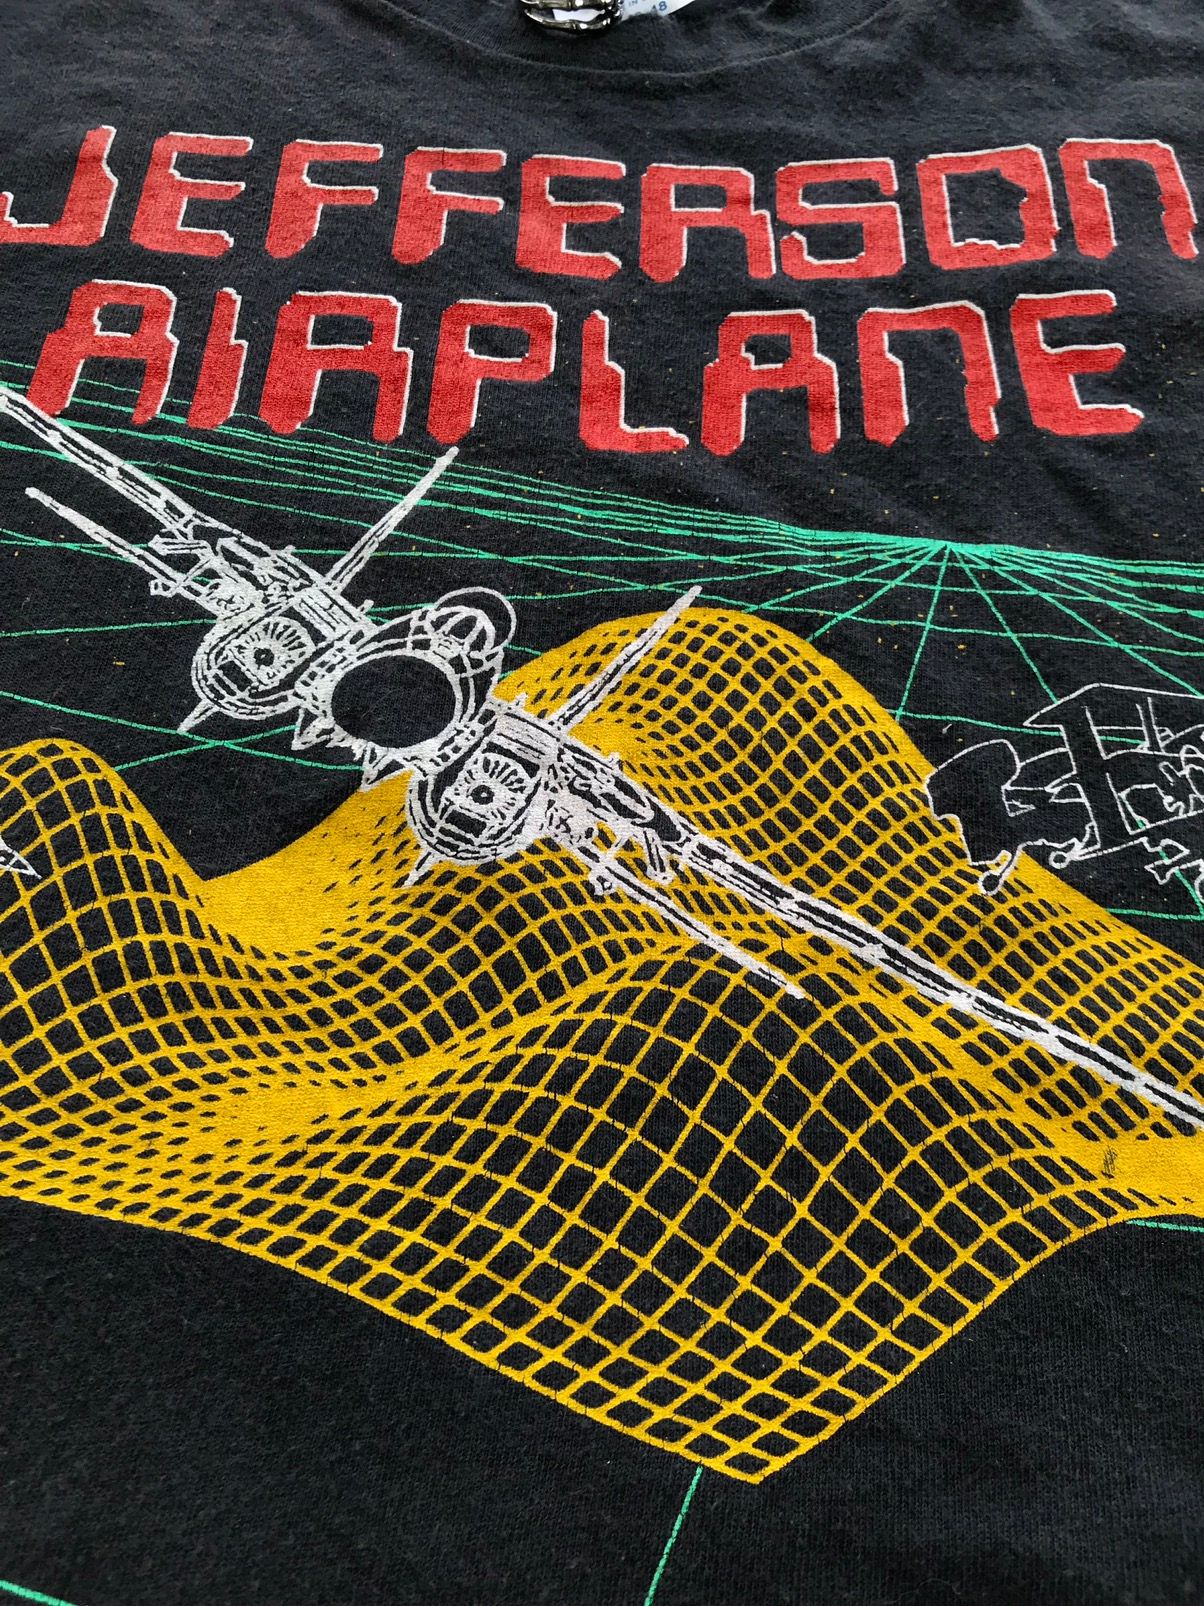 Vintage 1989 Jefferson Airplane Tour 89 Slick 80s VTG Hanes Shirt Size US XL / EU 56 / 4 - 7 Thumbnail